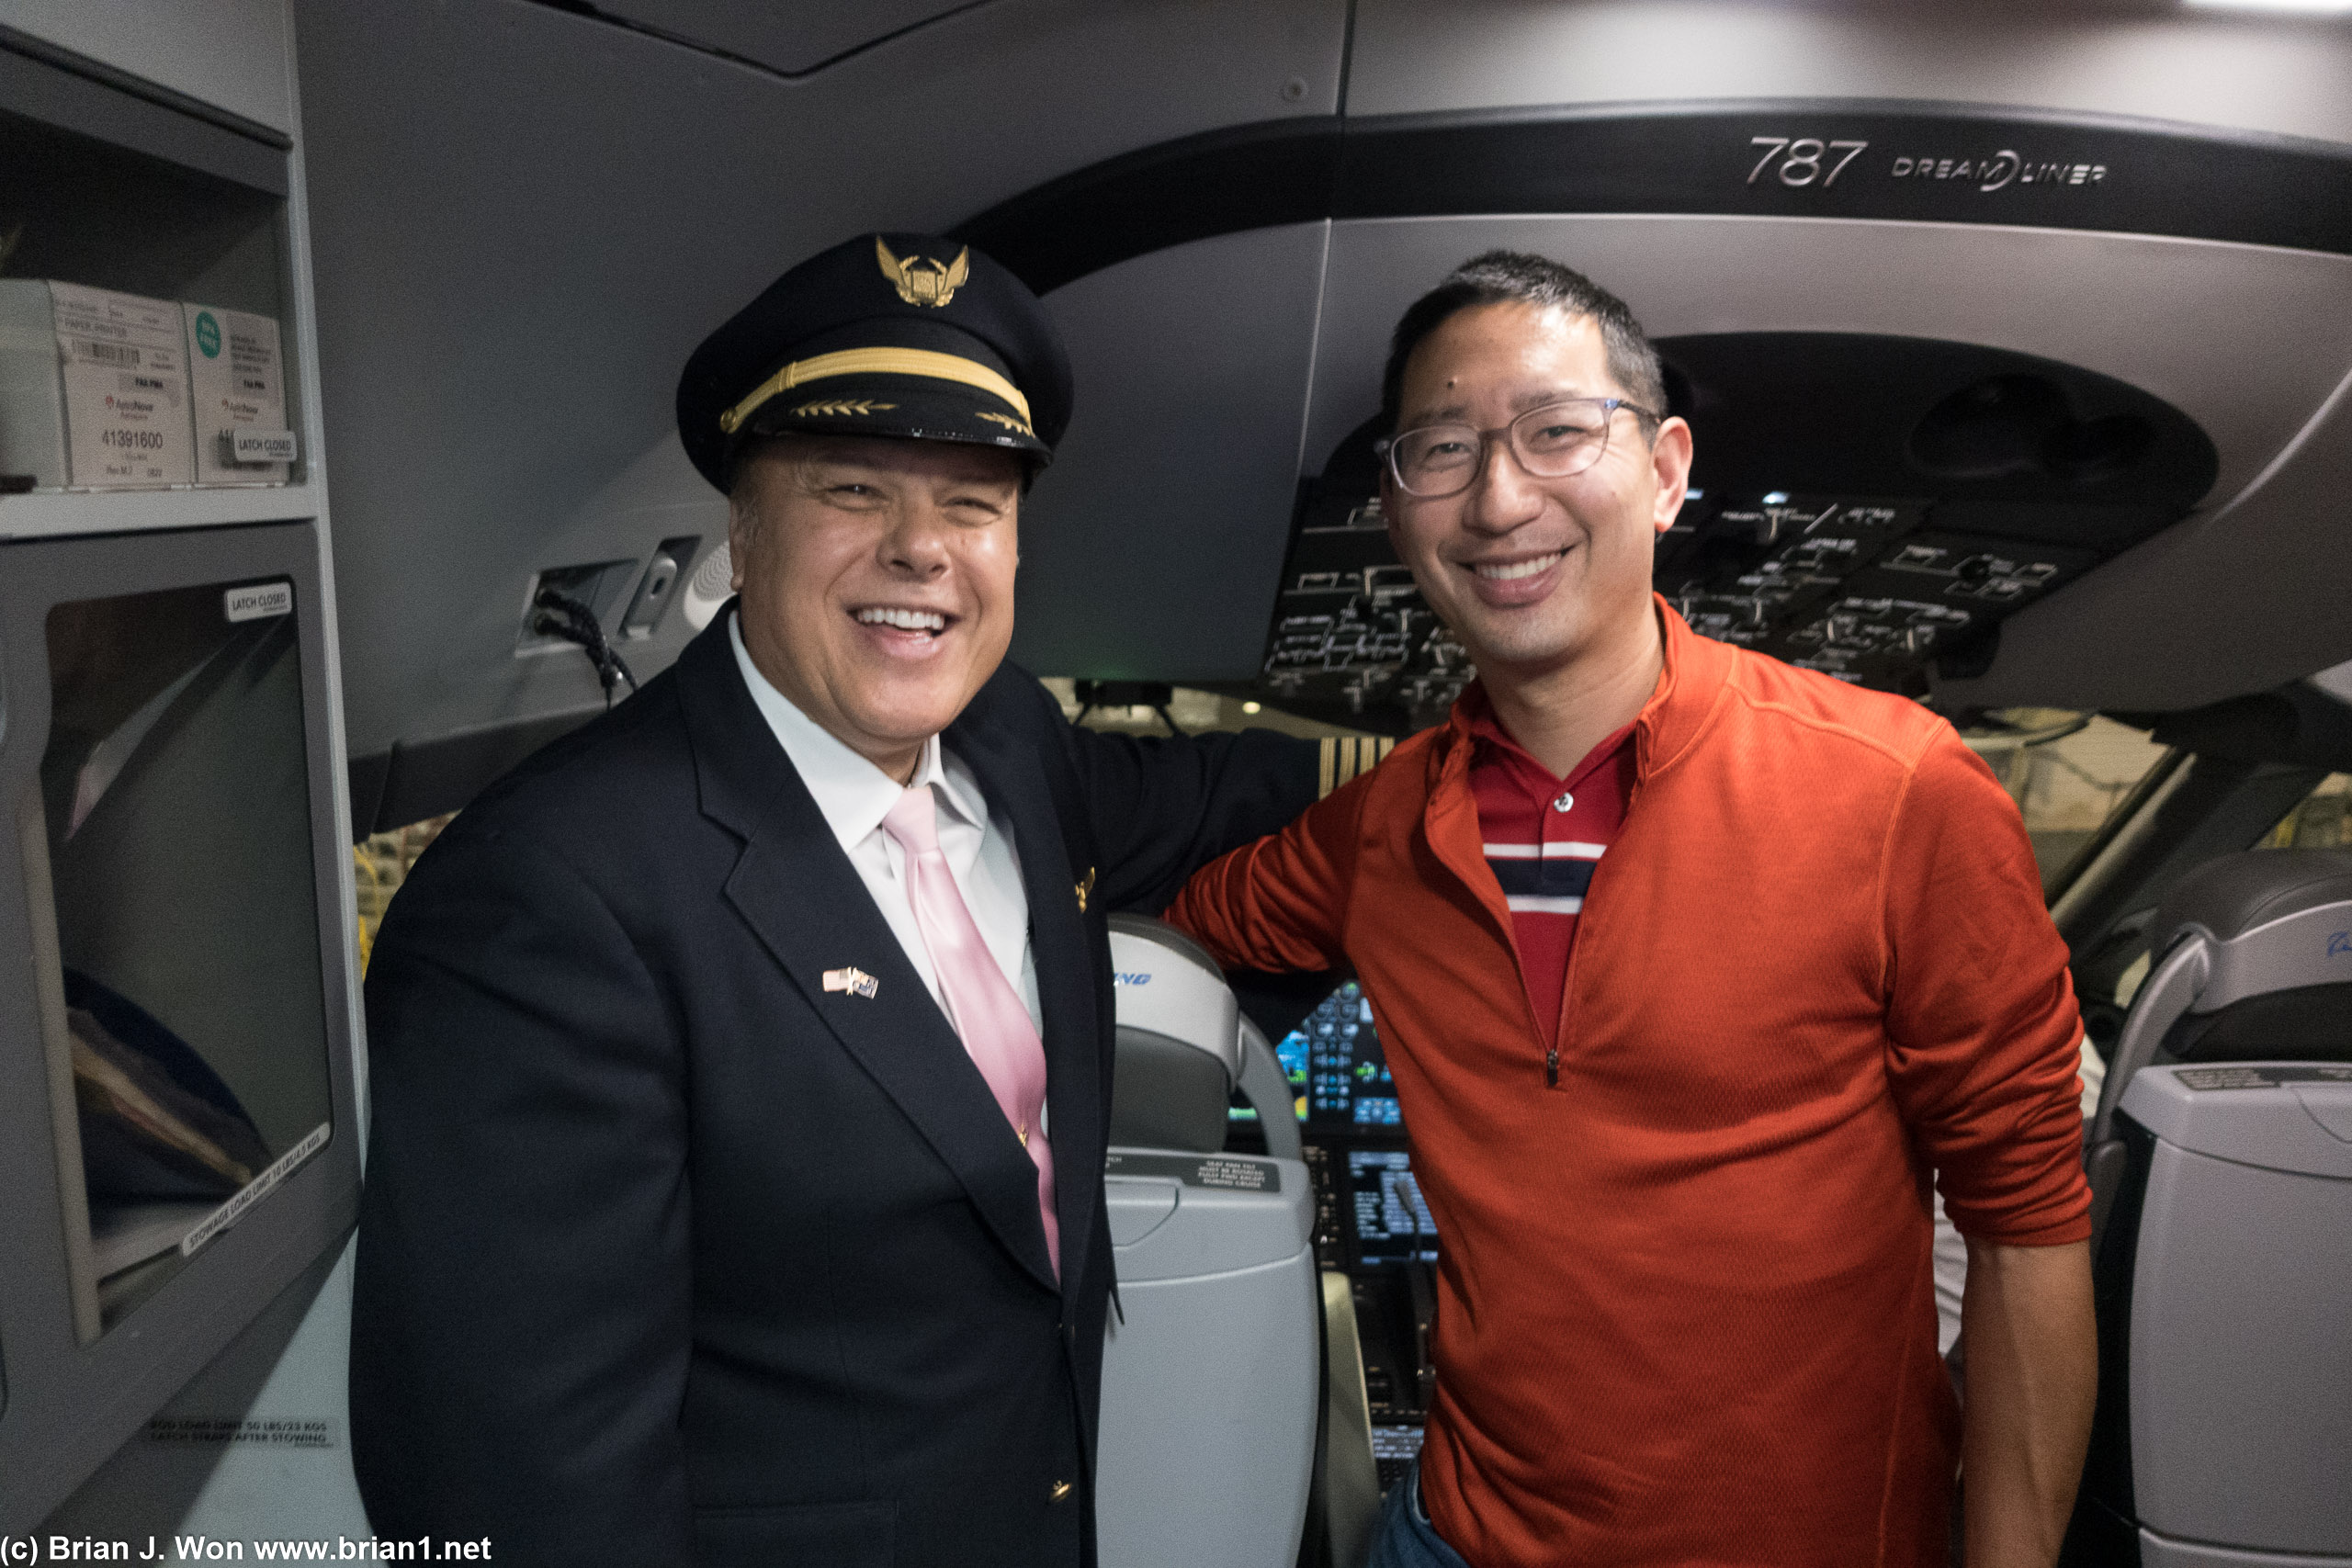 Posing with the captain of UA flight 96, Captain Laszlo Horanyi.